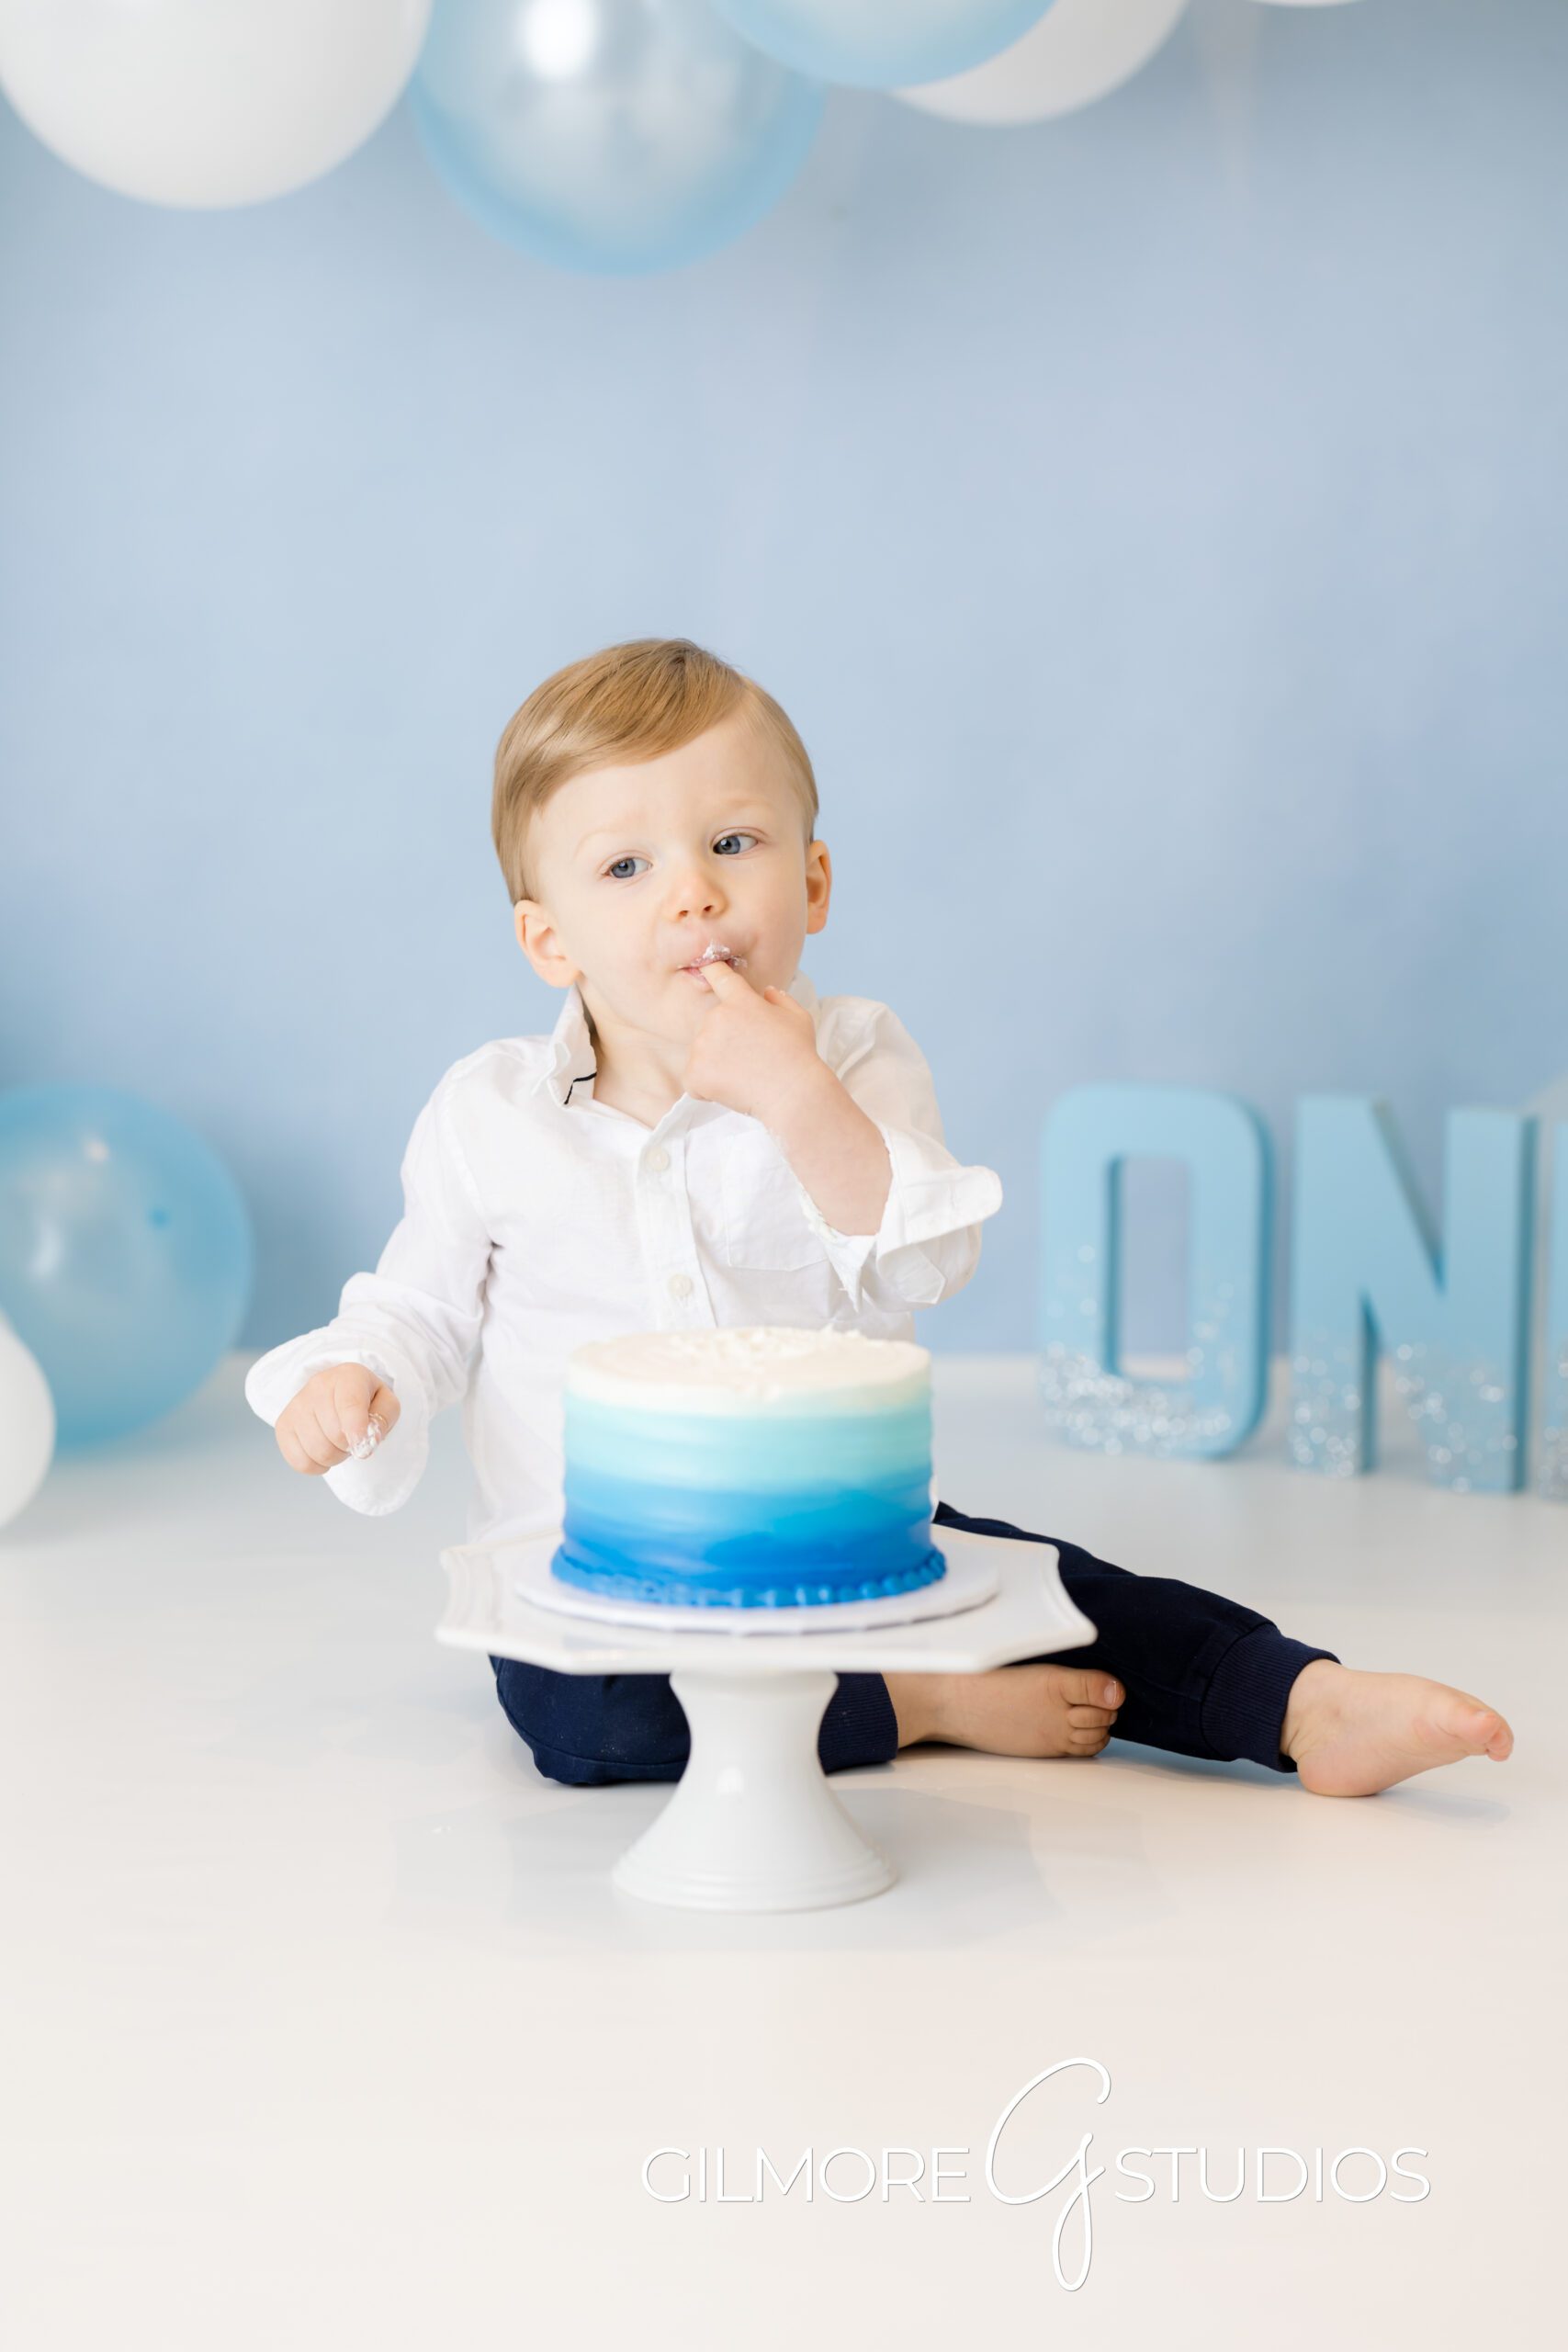 Simple 1st Birthday Cake Smash - Gilbert, AZ Photographer, baby on blue and white balloon background, brother, first birthday, cake smash photo shoot, Gilmore Studios, blue and white cake